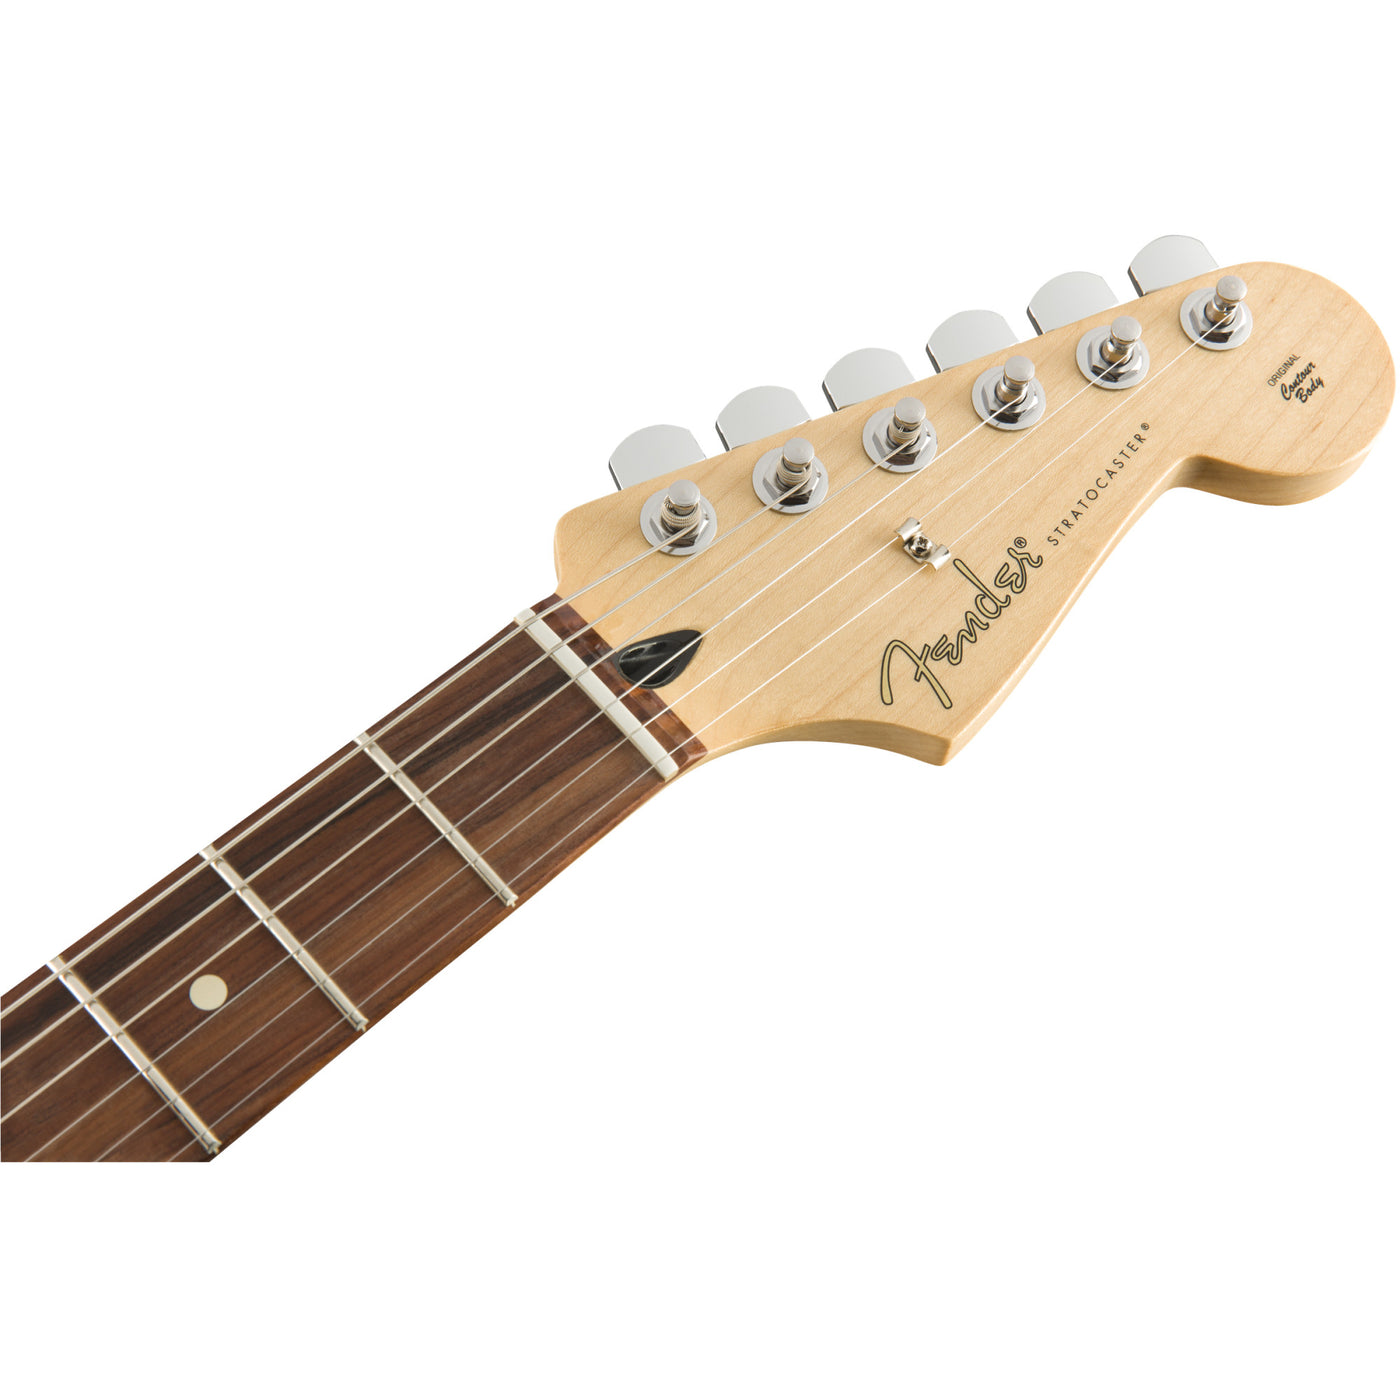 Fender Player Stratocaster Plus Top Electric Guitar, Tobacco Burst (0144553552)